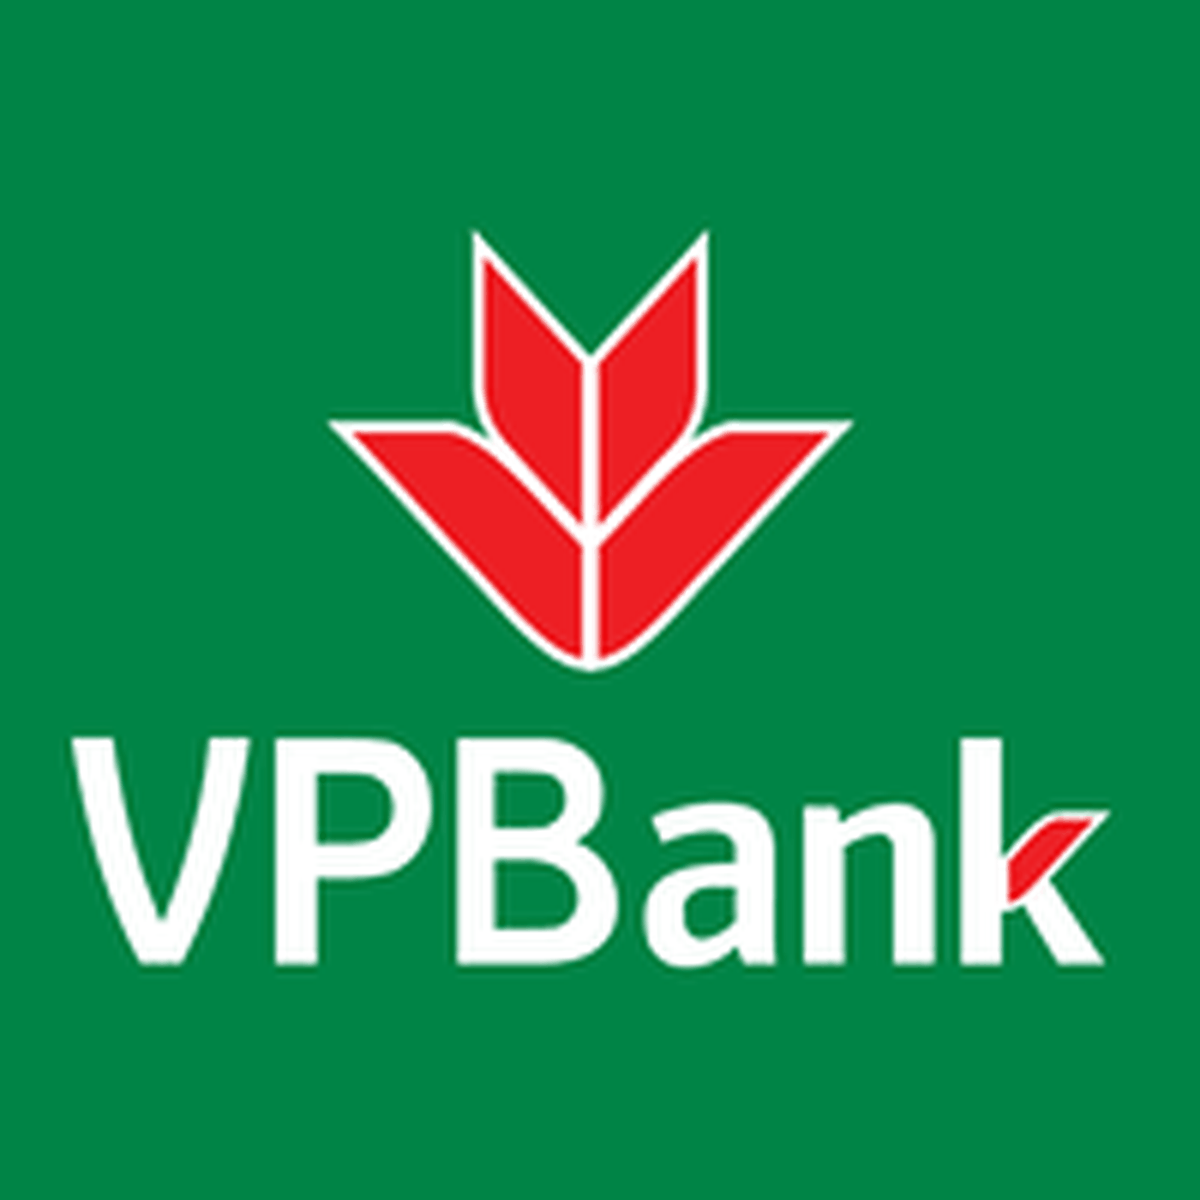  VP Bank